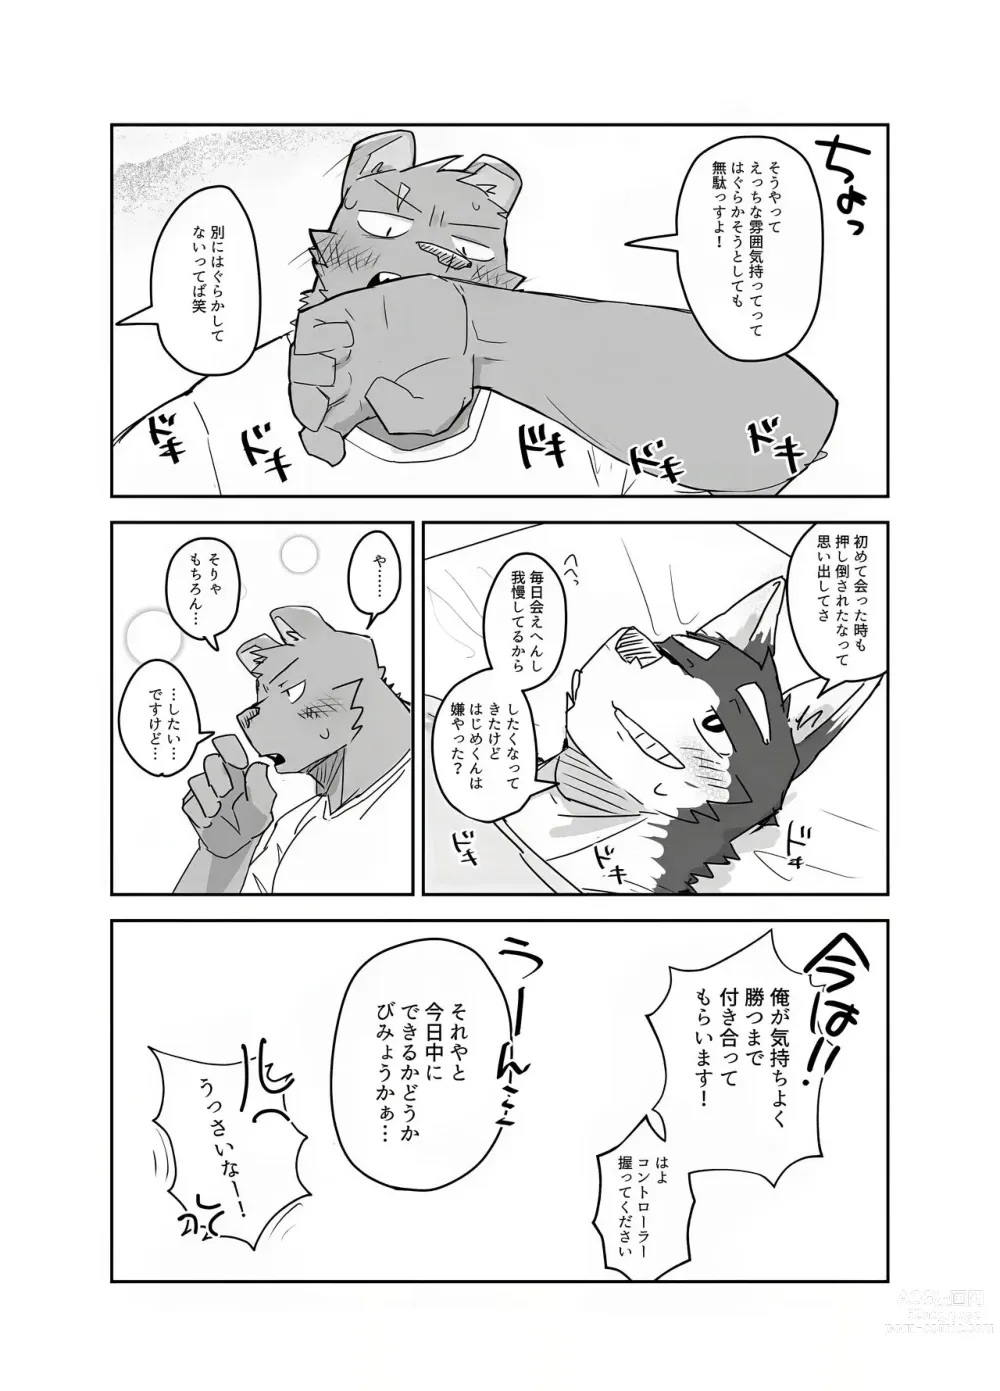 Page 6 of doujinshi 梅雨の日